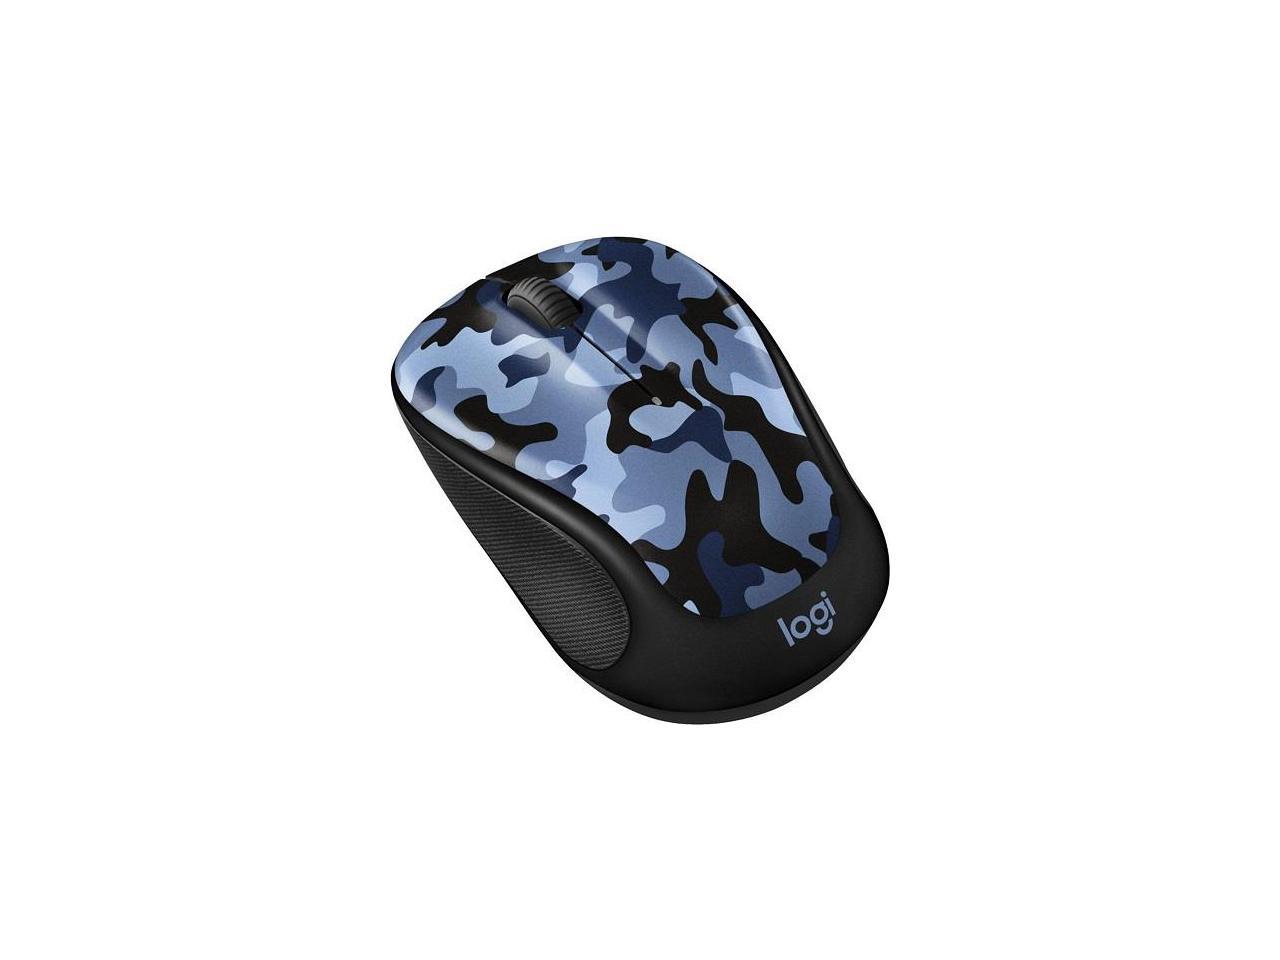 Logitech 910005662 M325c Wireless Mouse in Blue Camo